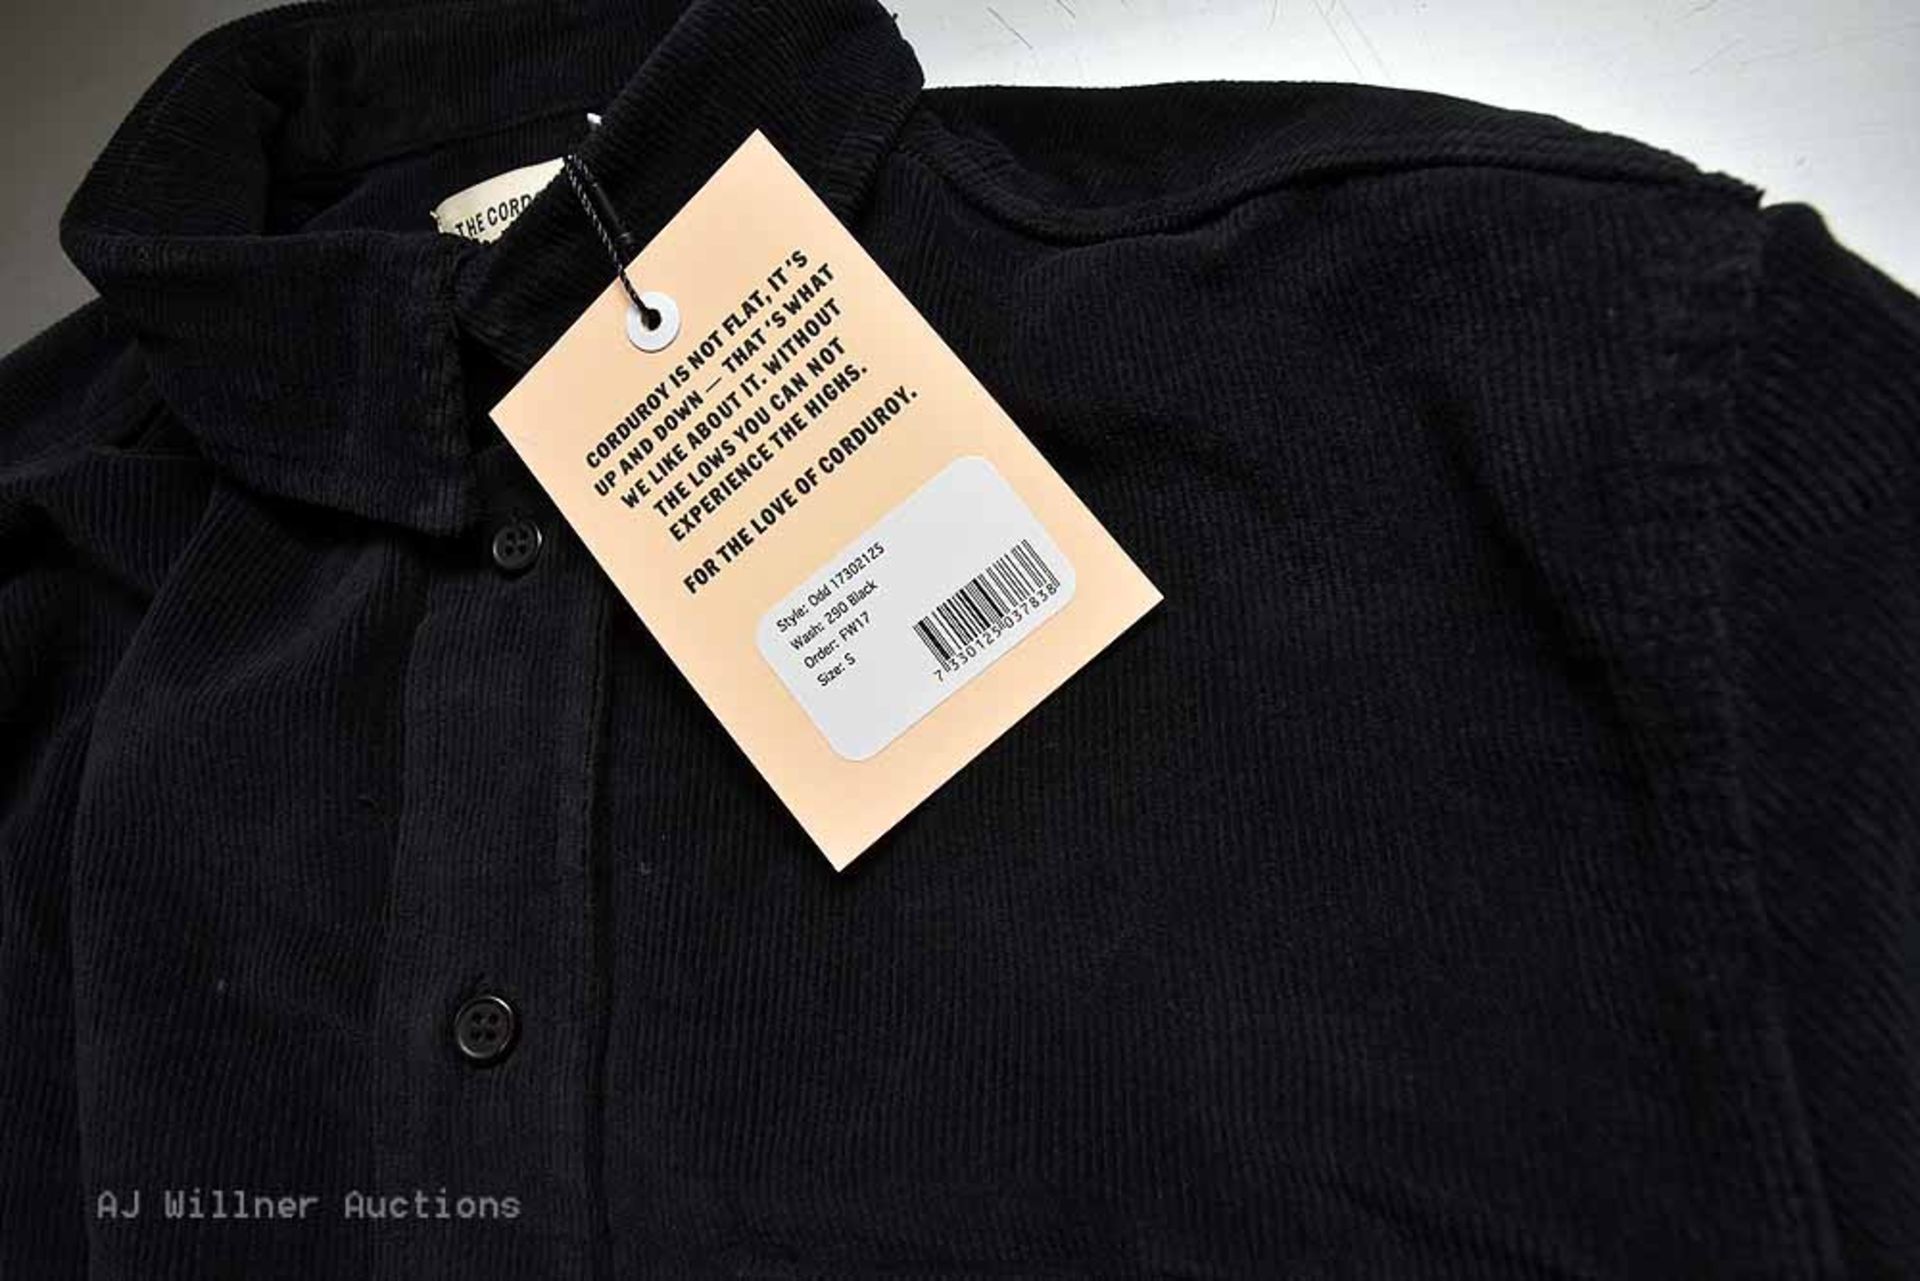 The Cords & Co. "Odd" Style, Uni-Sex Collard Long Sleeve Shirt(Black) Small, Medium, Large, X-Large - Image 5 of 6